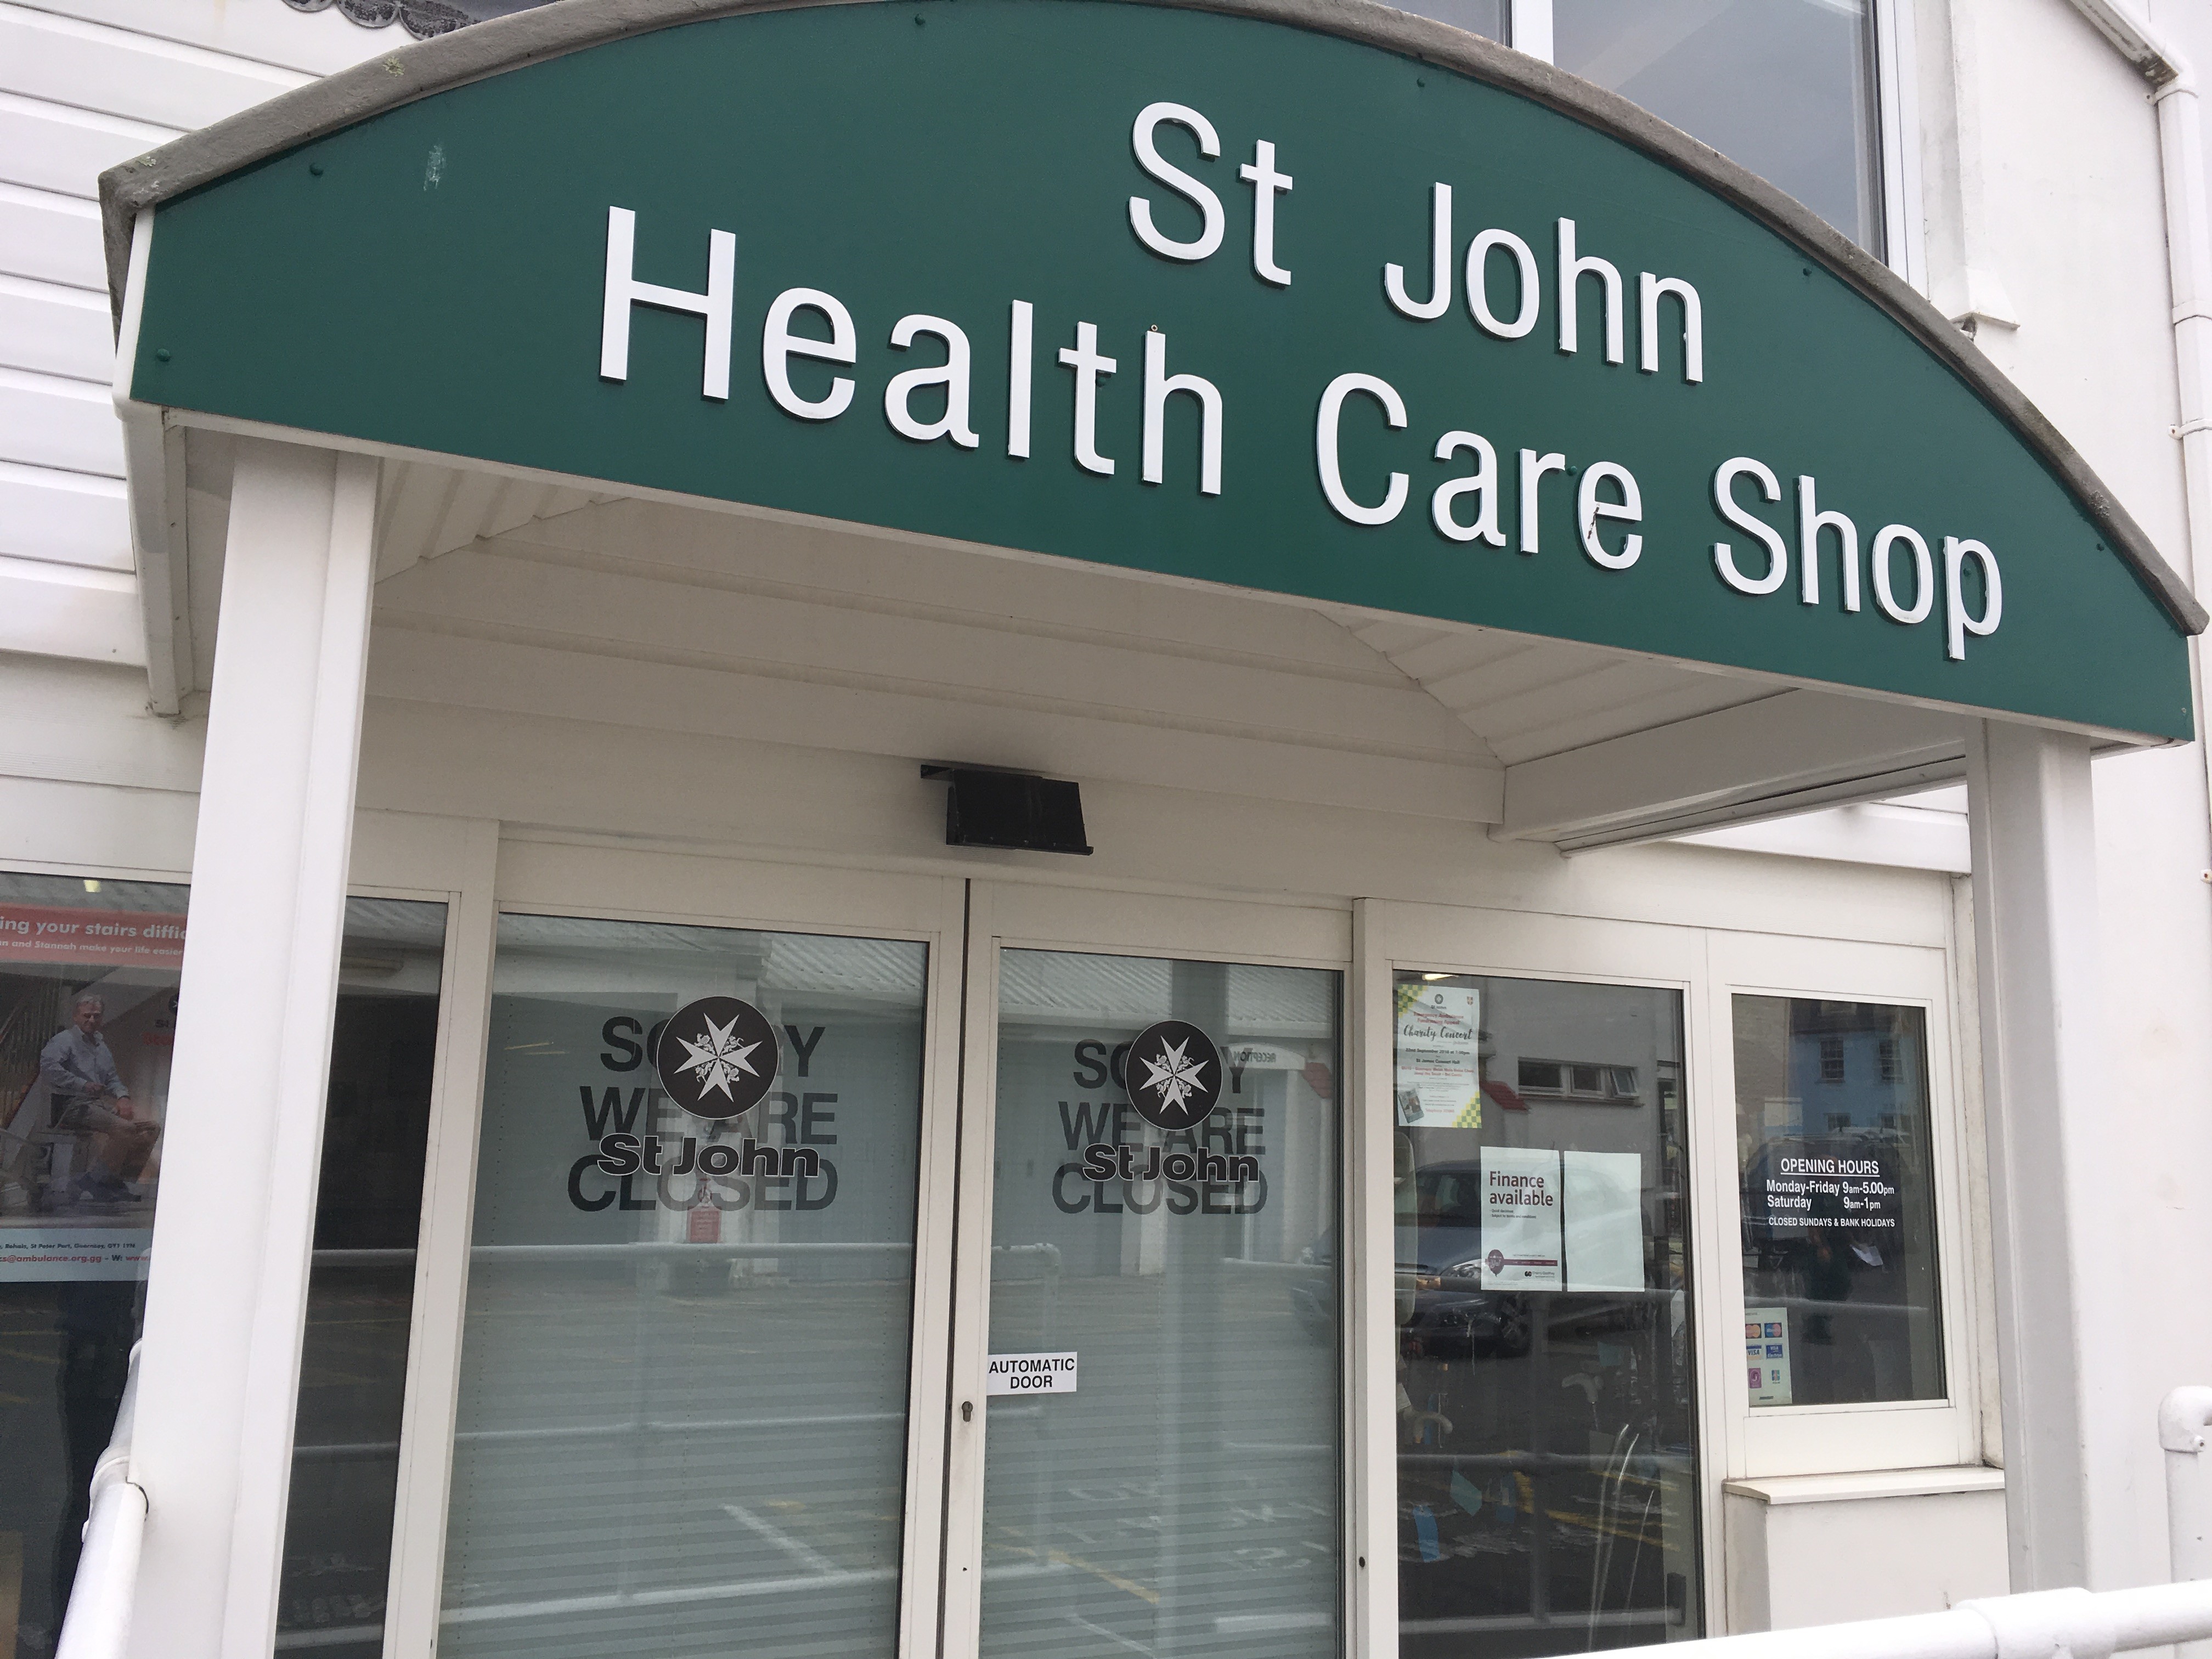 St John healthcare shop_front_1.jpg